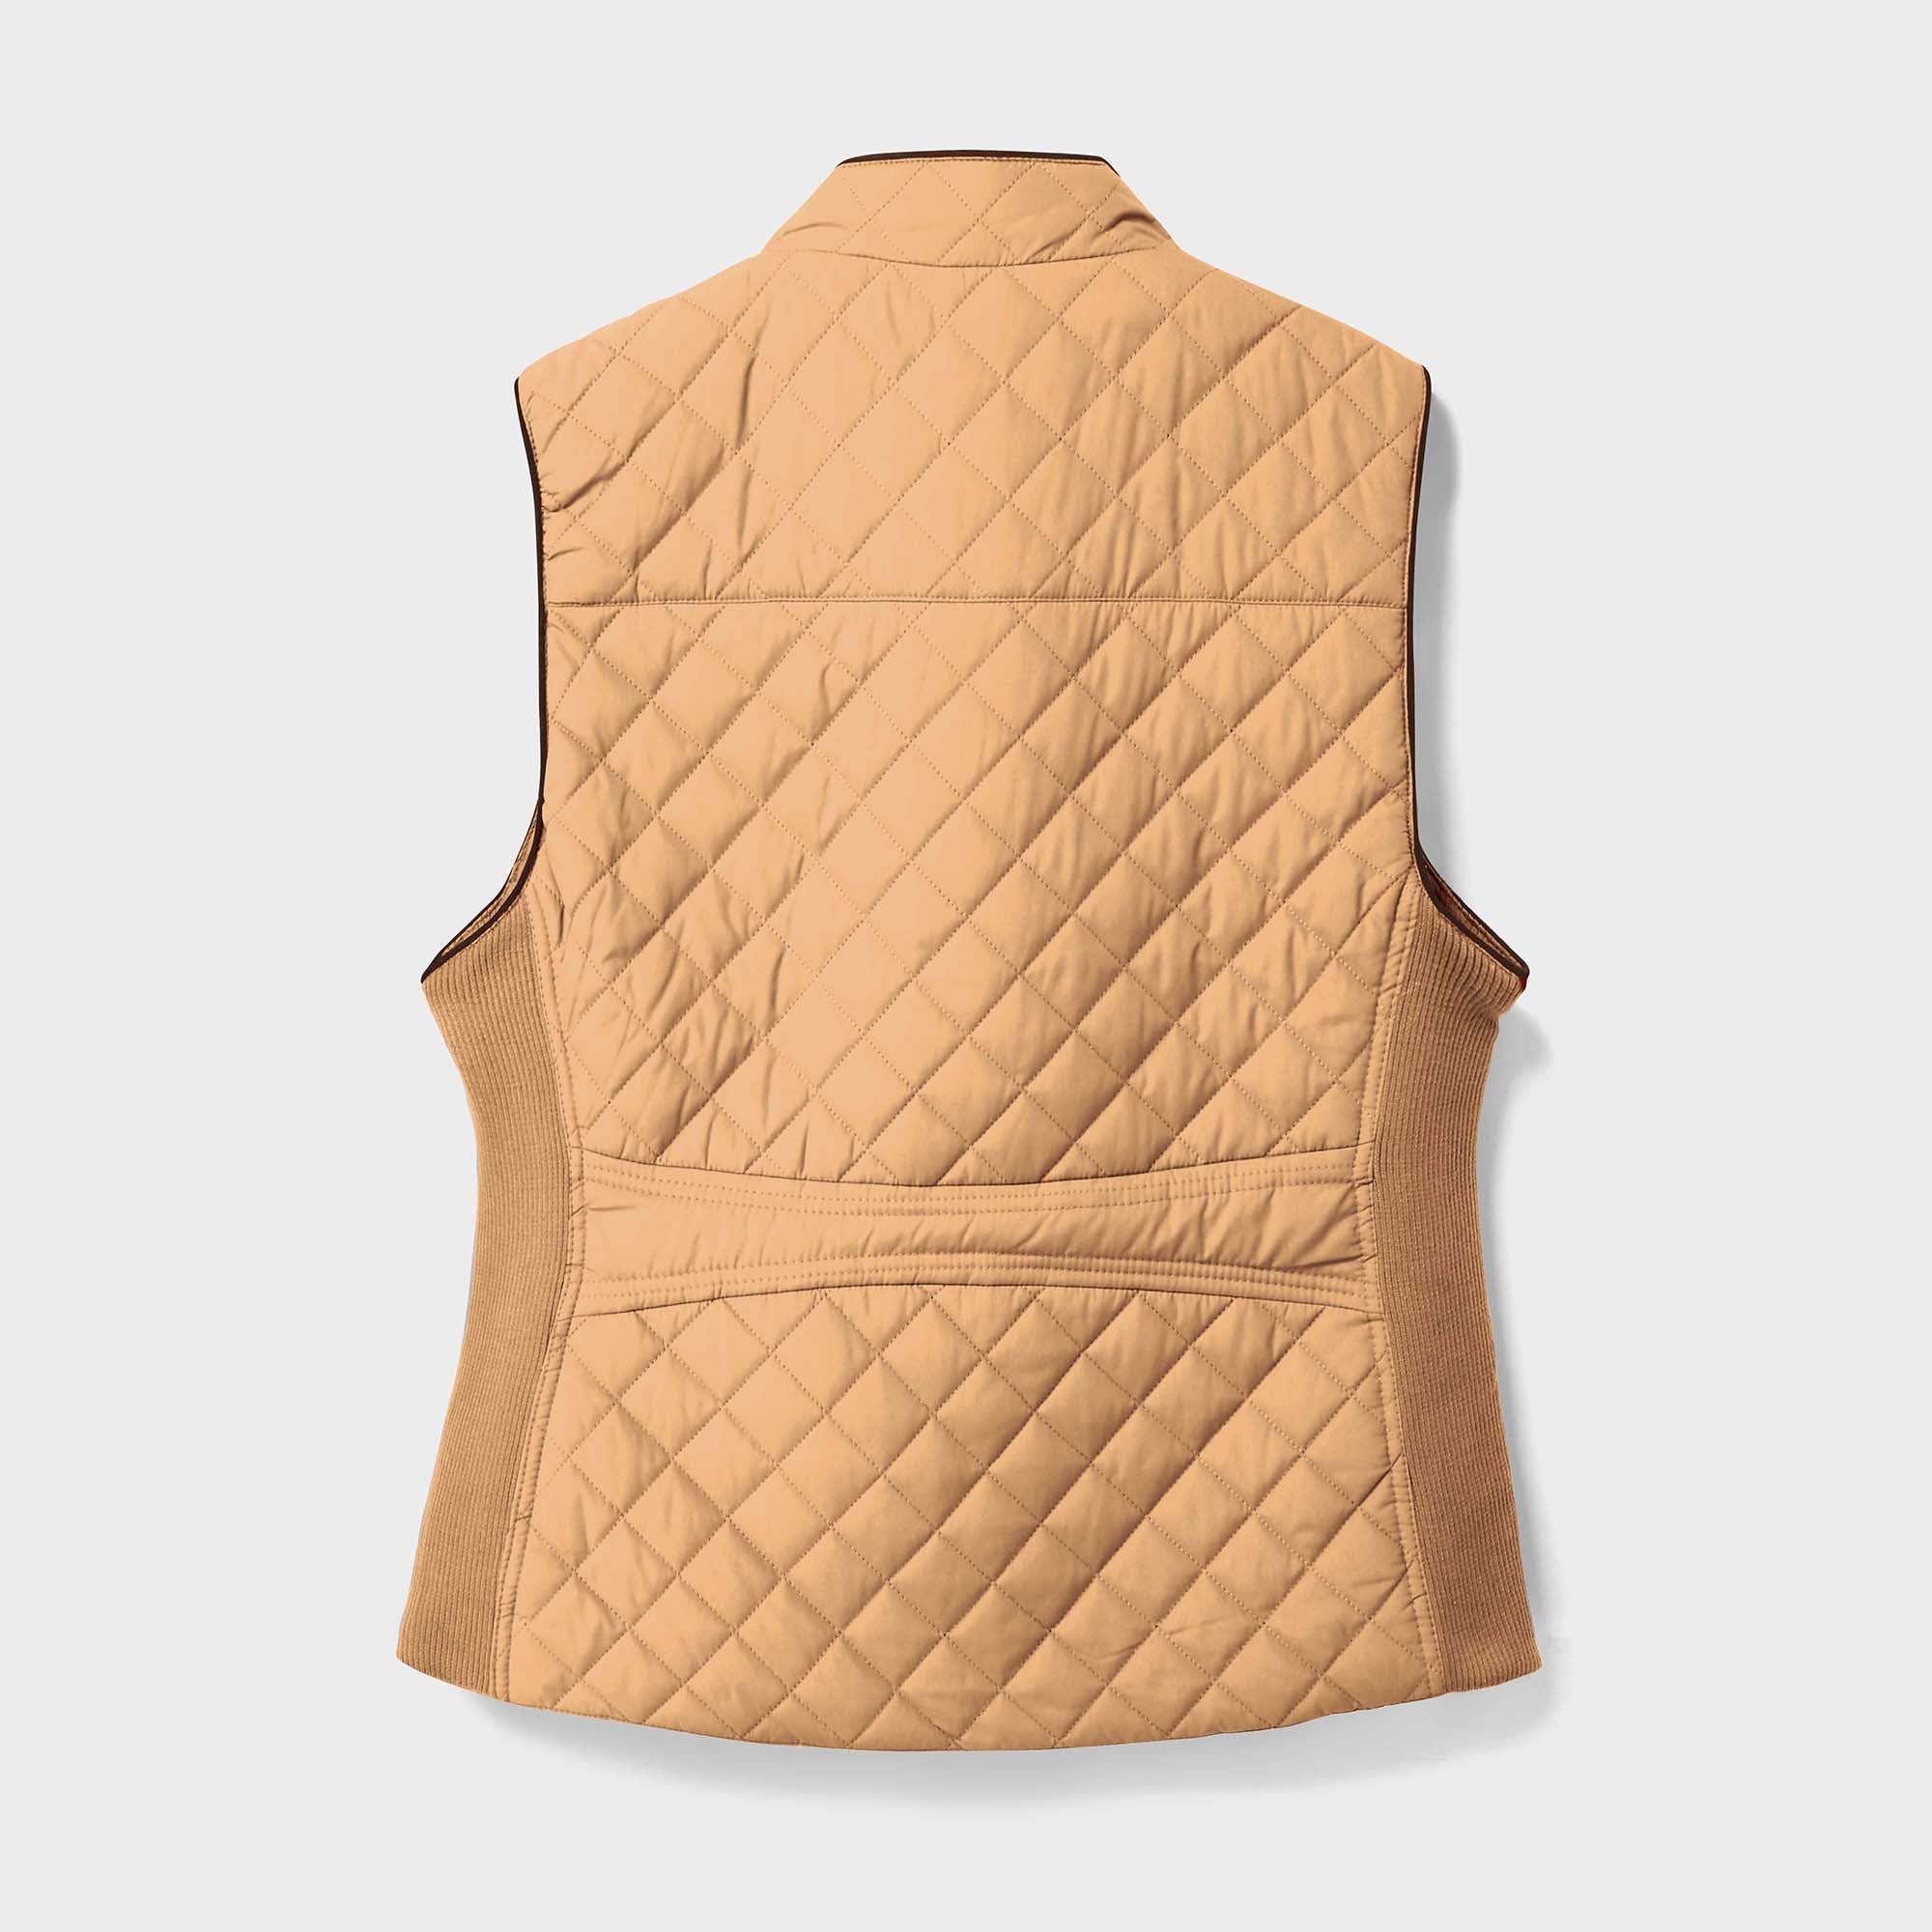 women vest_women puffer vest_sweater vest women_sweat vest for women_ladies vests_women's dressy vests_women fashion vest_Khaki